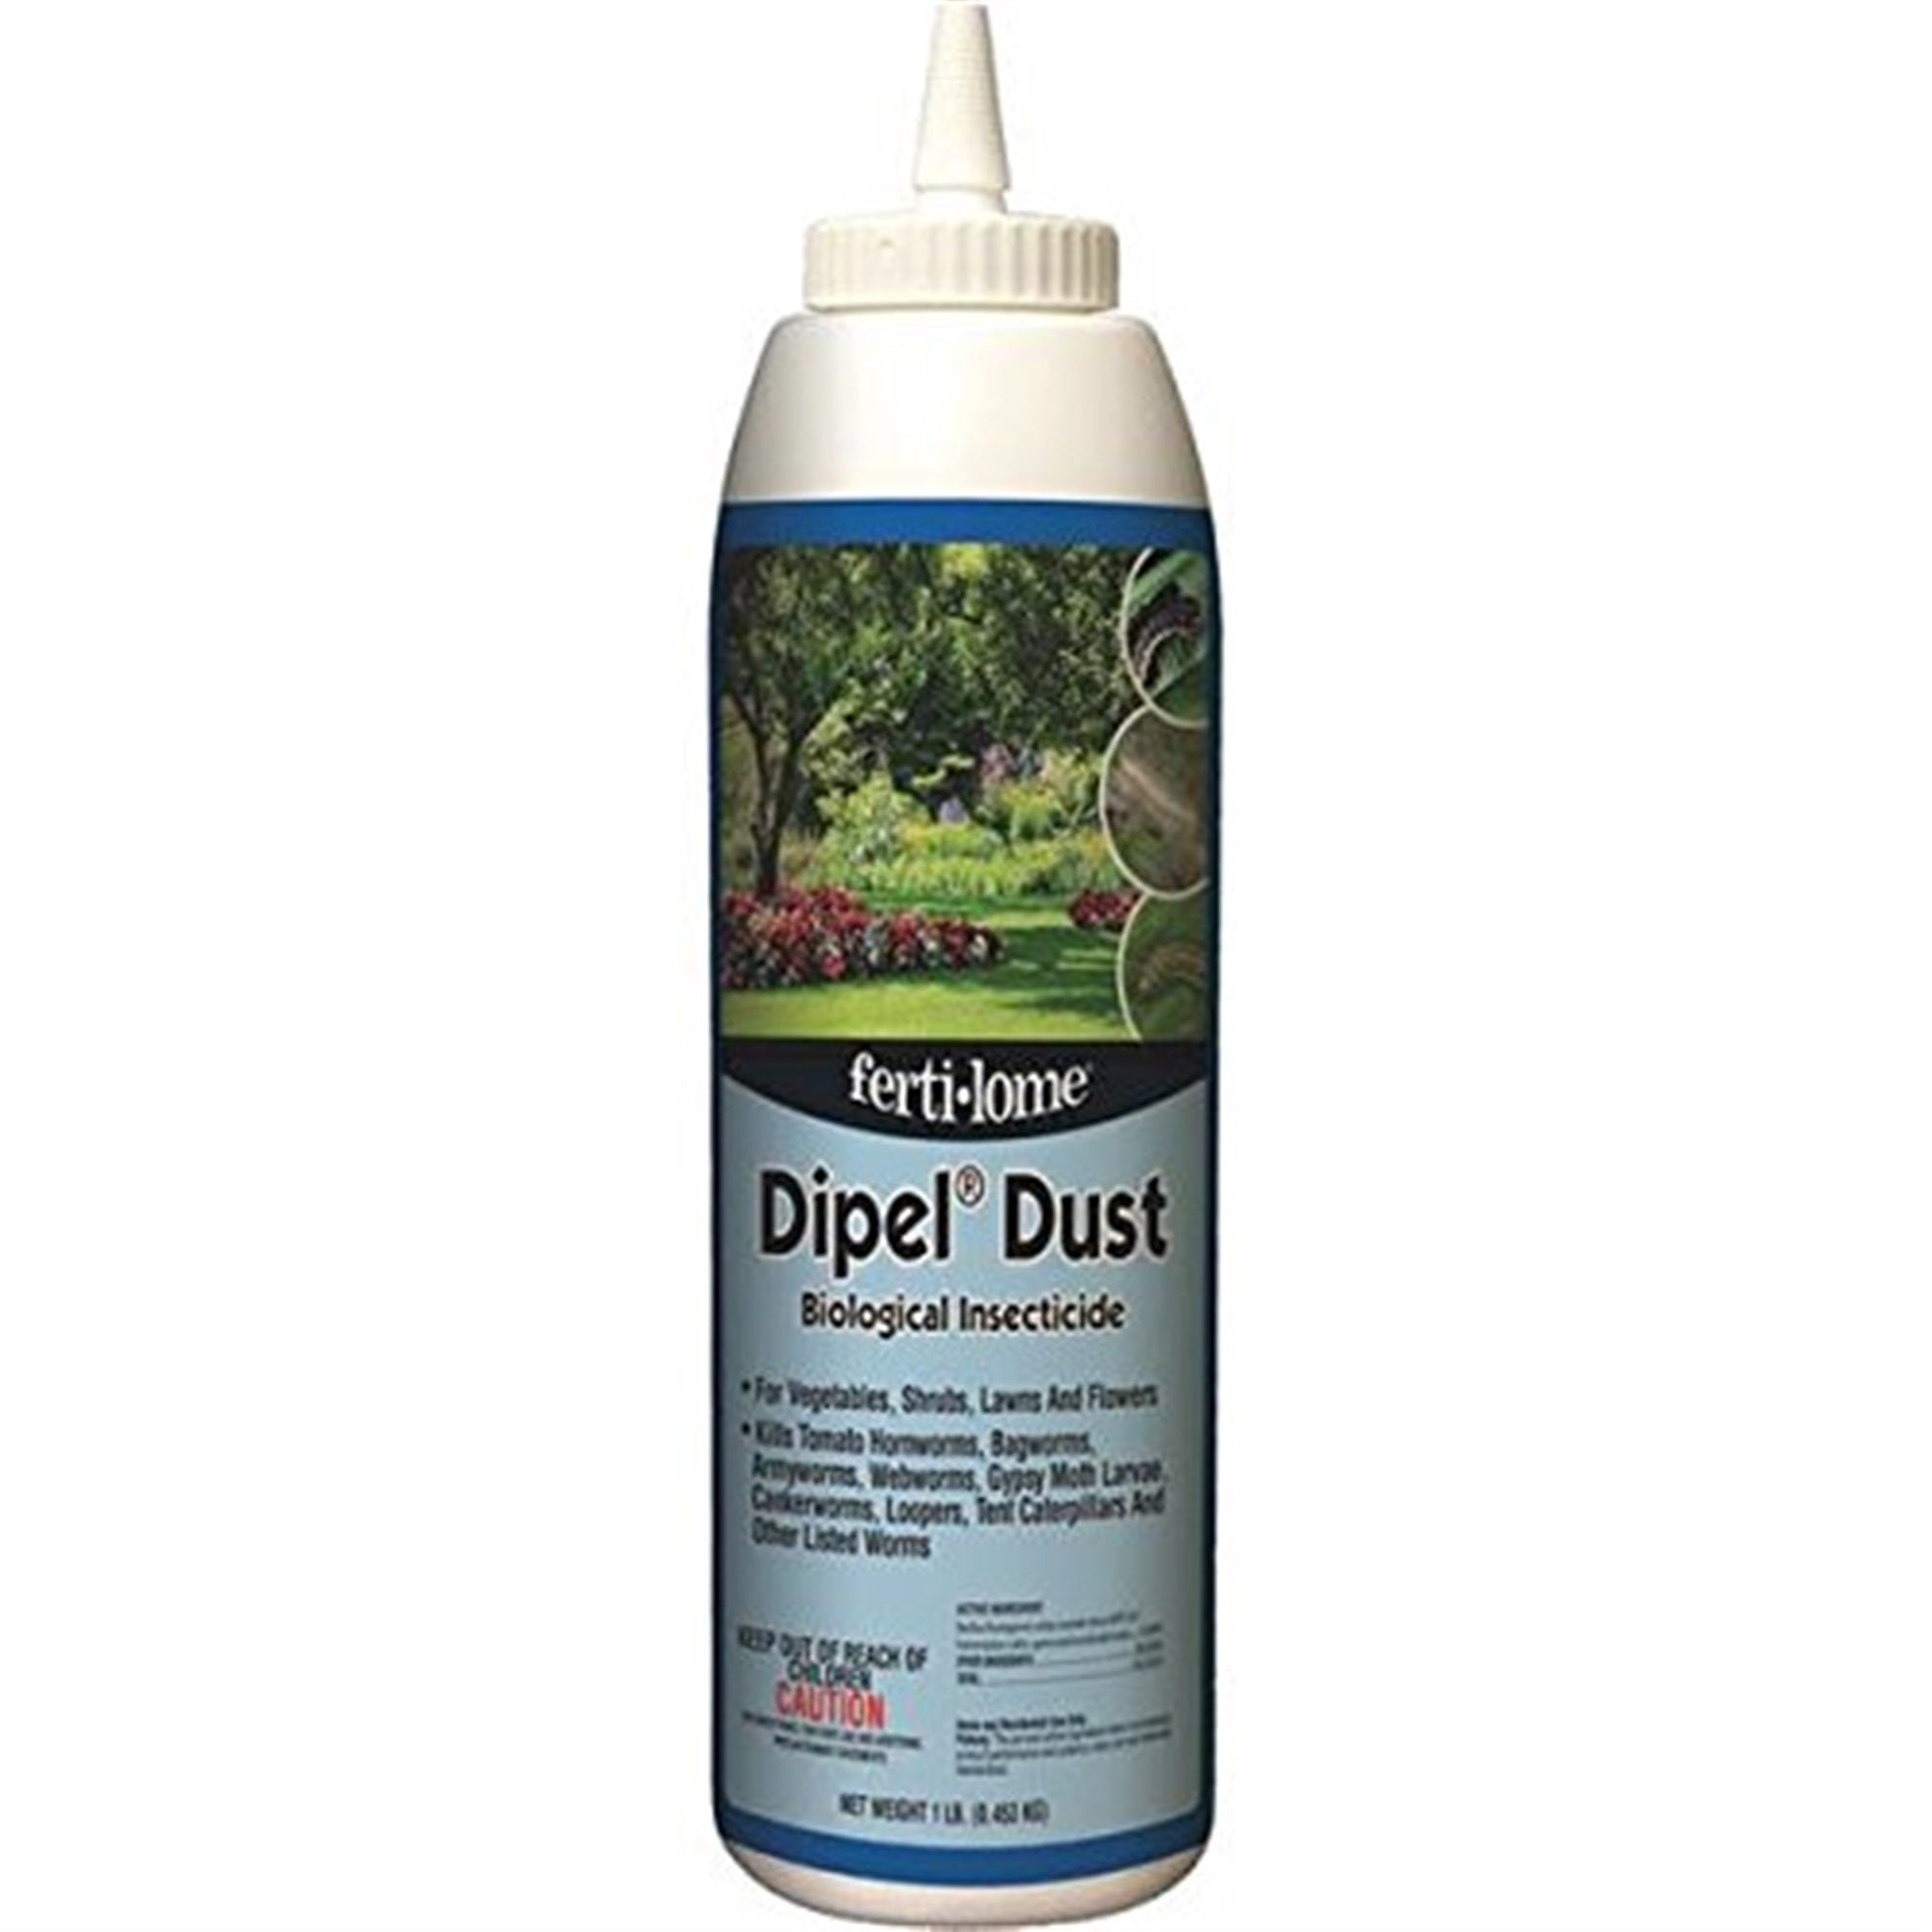 Ferti-lome Dipel Dust Biological Insecticide, 1LB